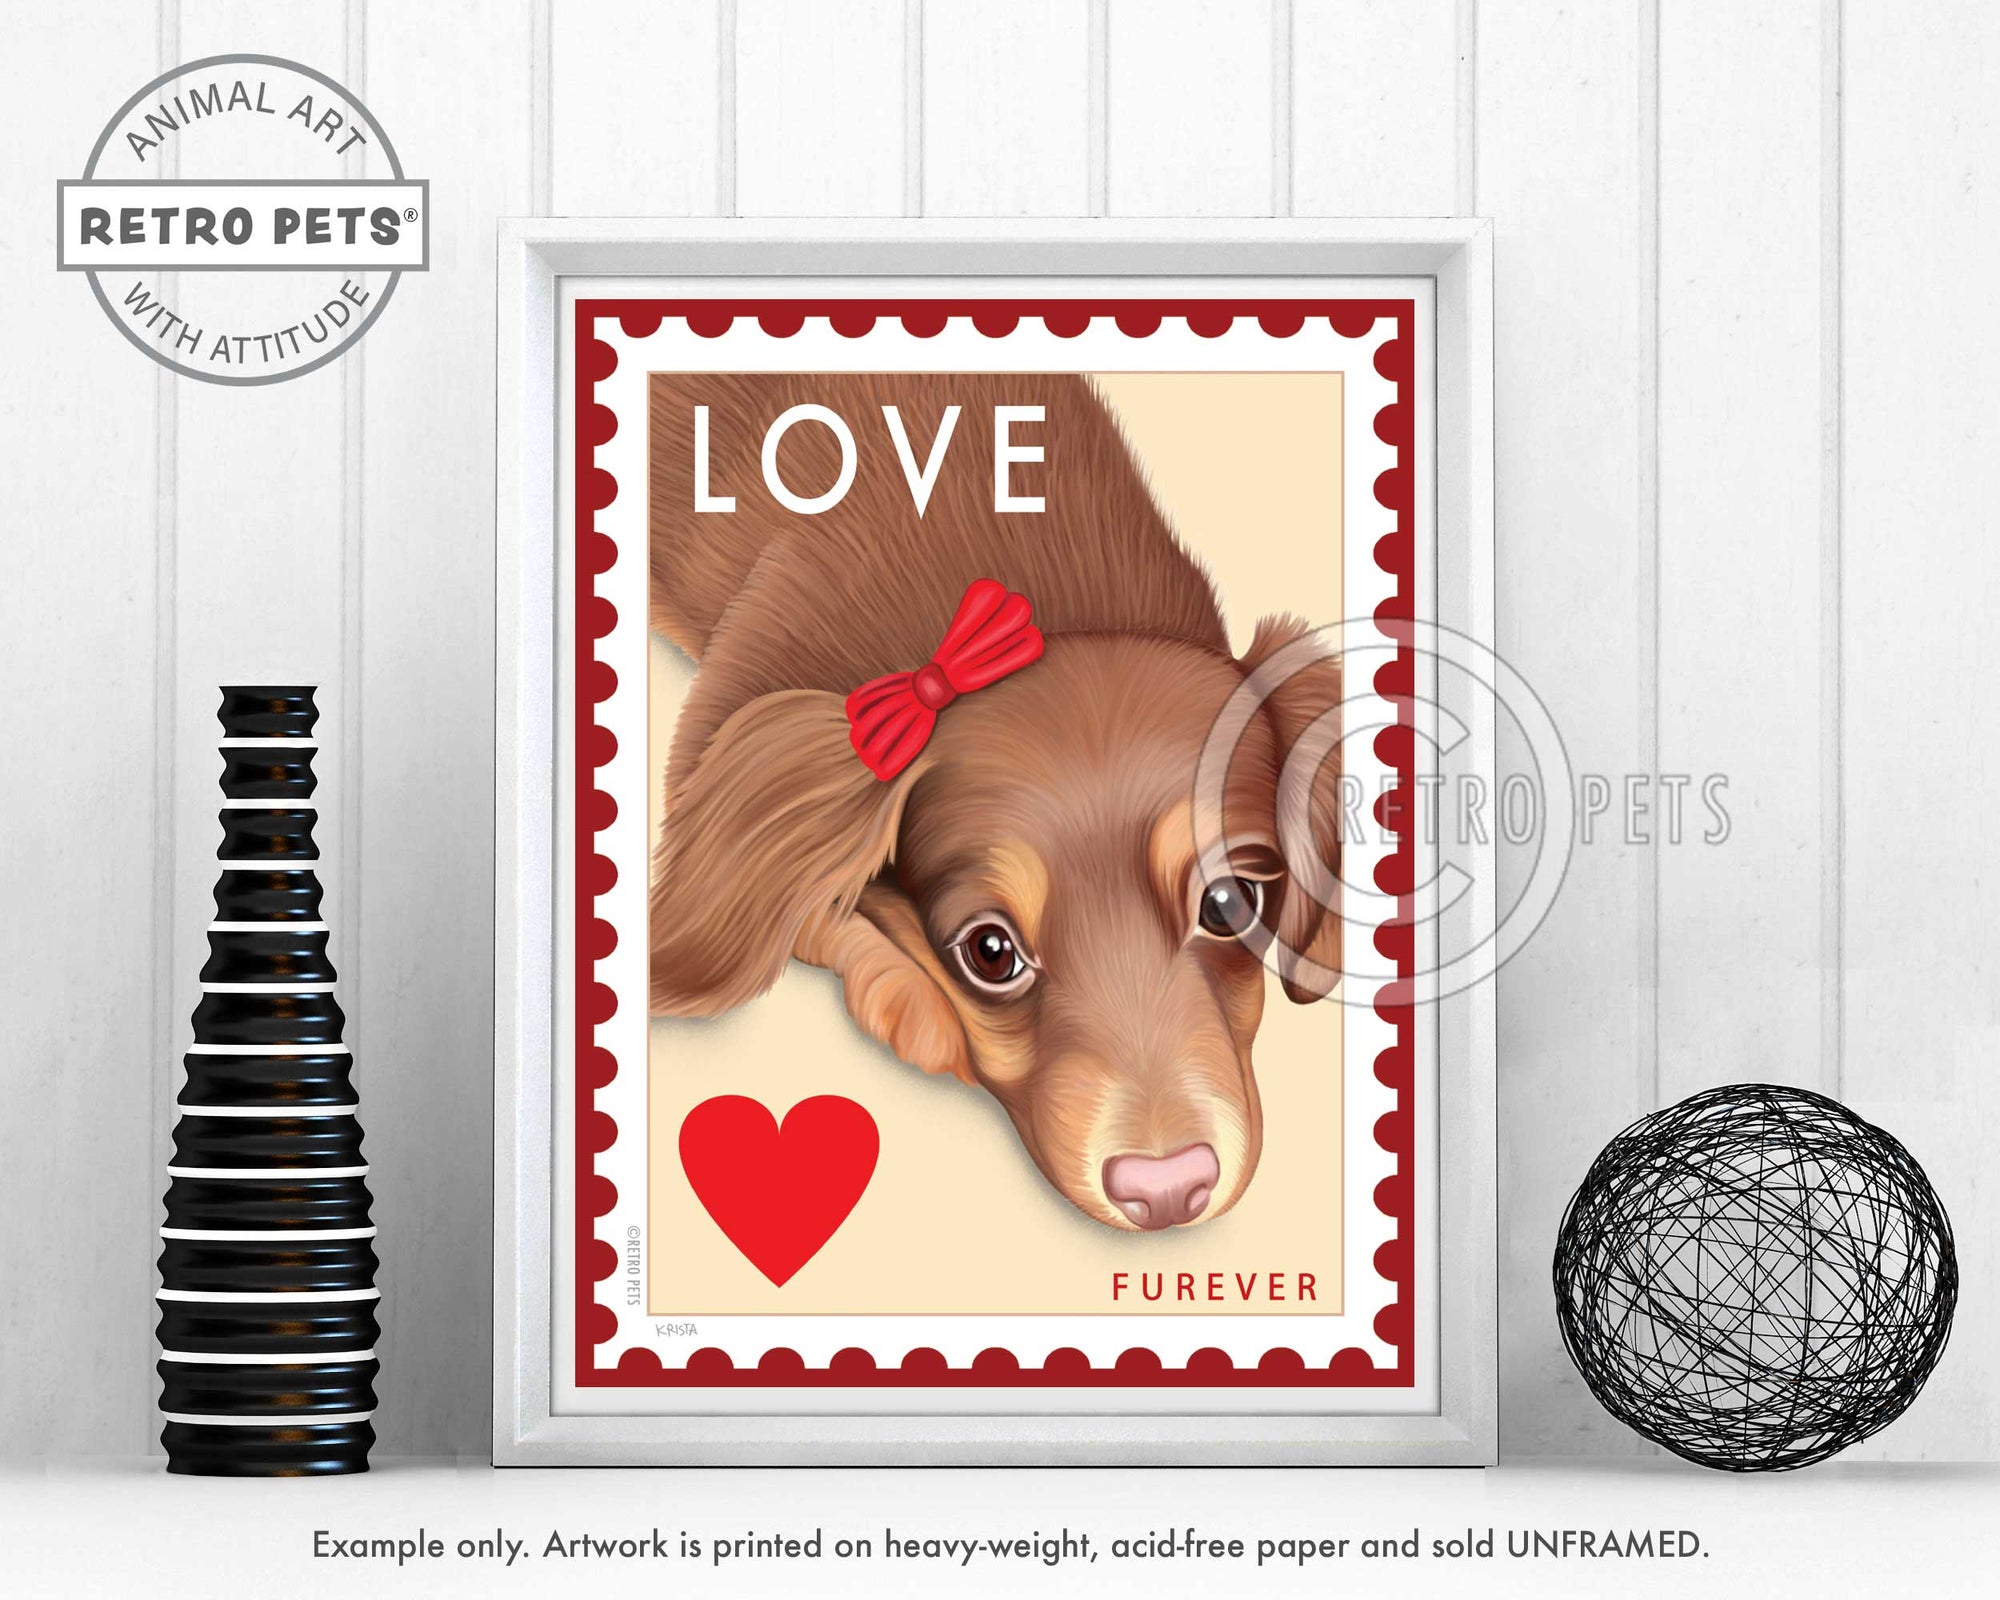 Doxie Love Stamp Furever Print